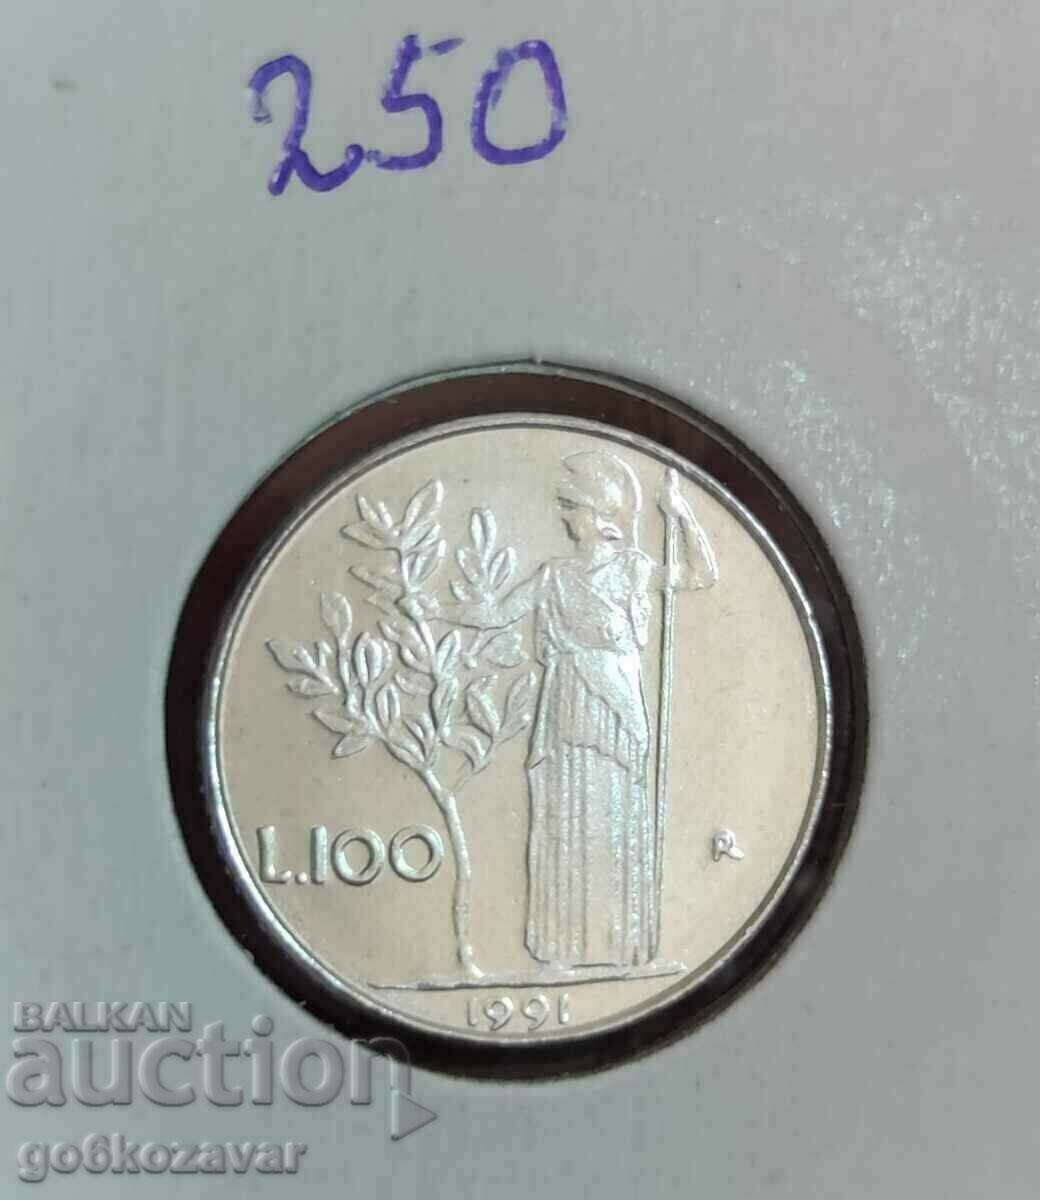 Italia 100 lire 1991